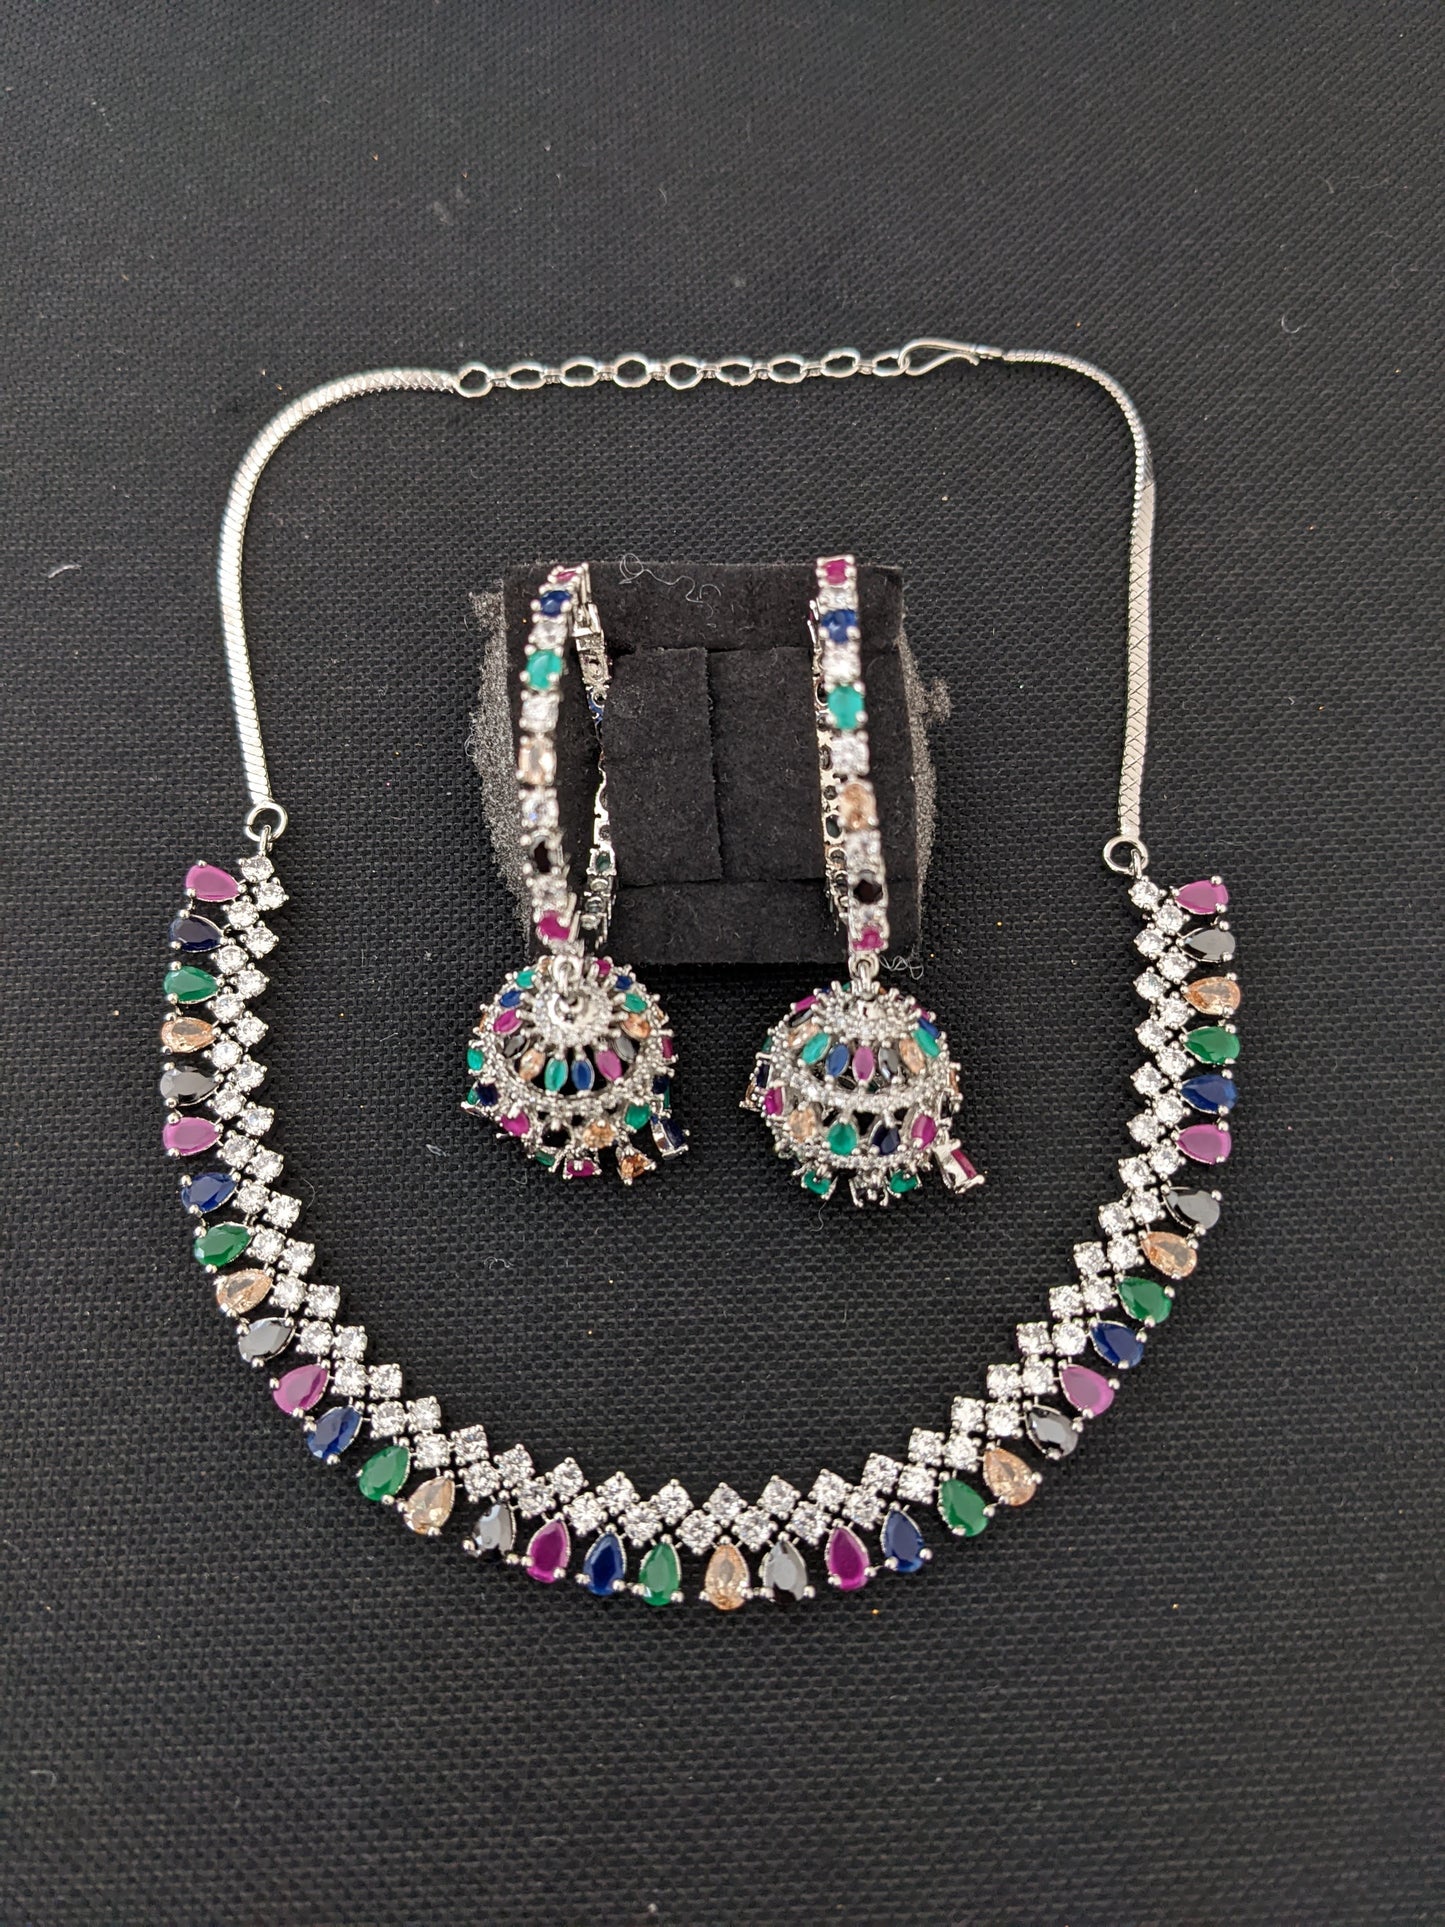 Diamond look alike Choker Necklace set - Design 2